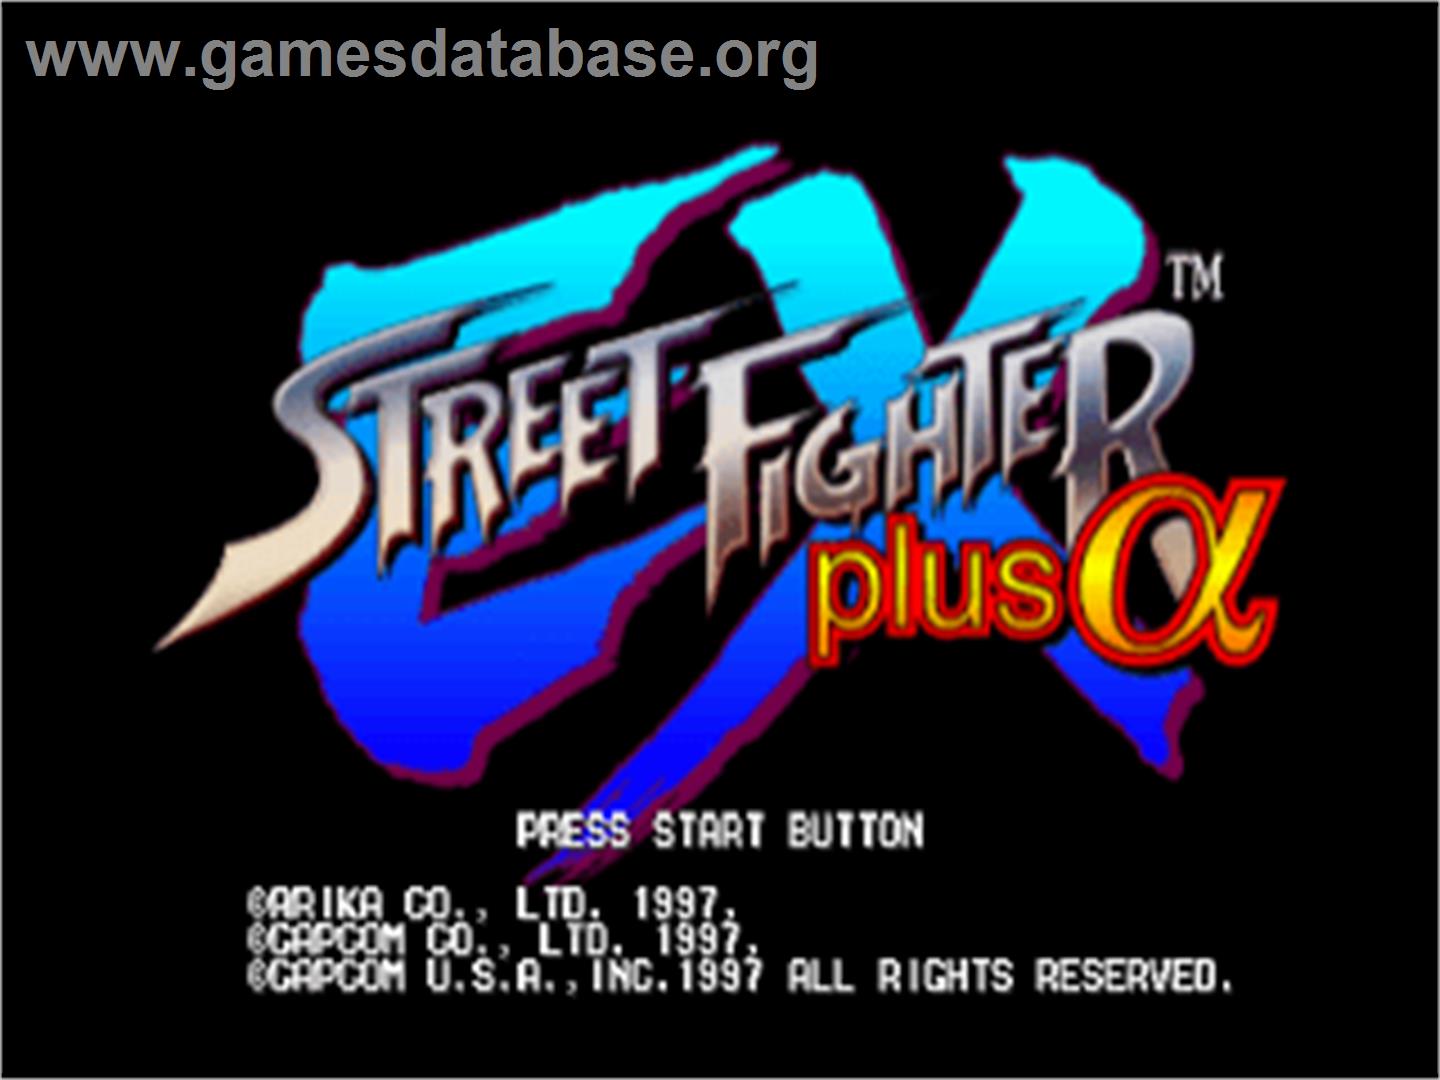 Street Fighter EX Plus Alpha - Sony Playstation - Artwork - Title Screen